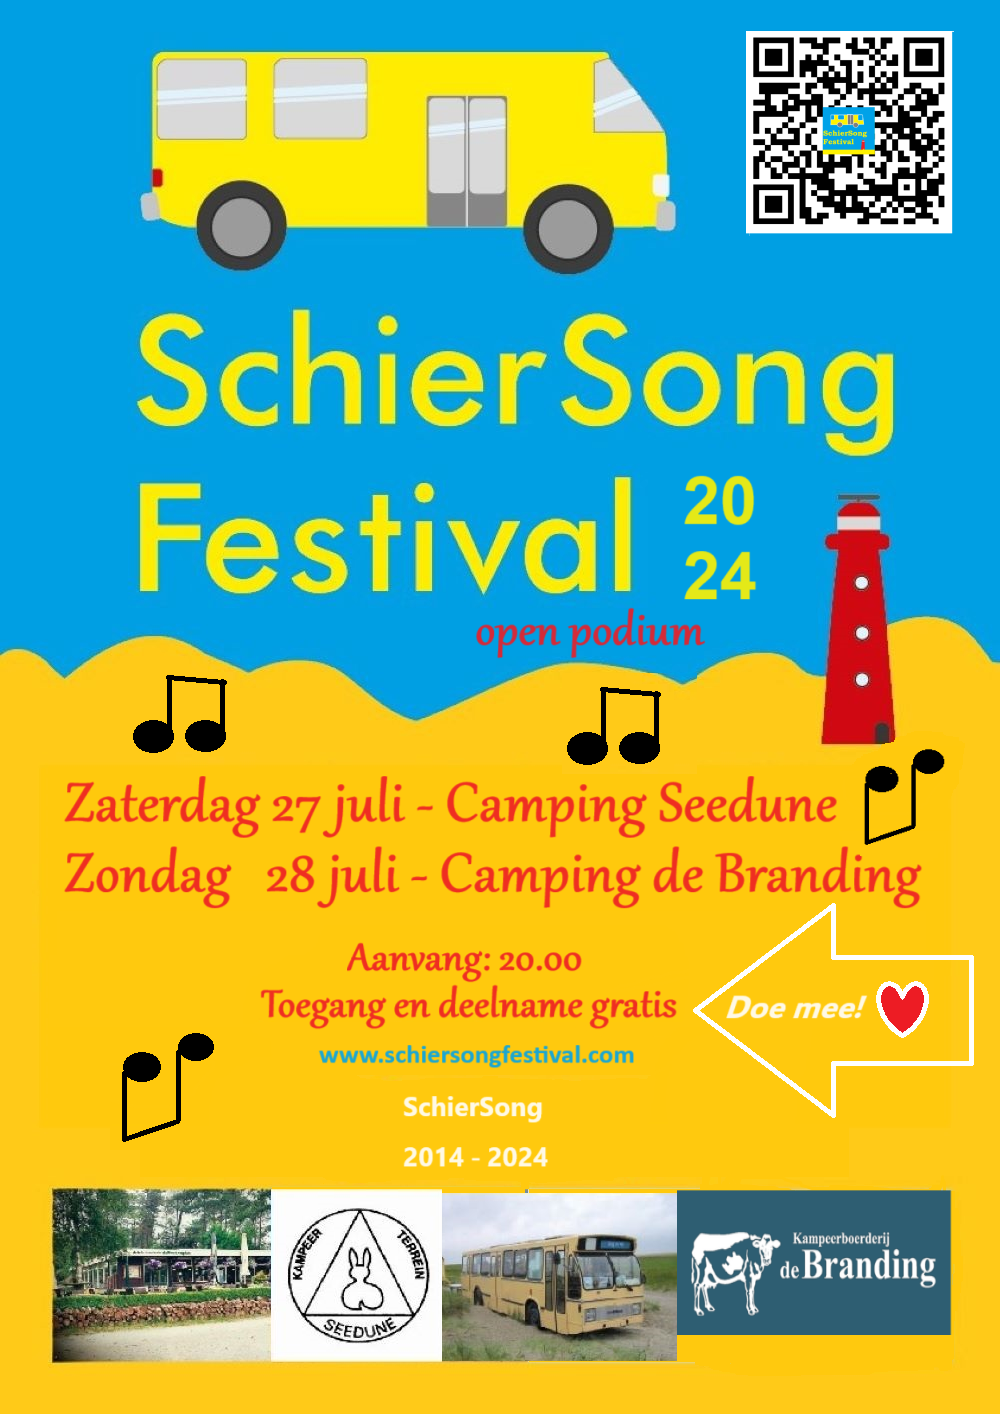 SchierSong festival